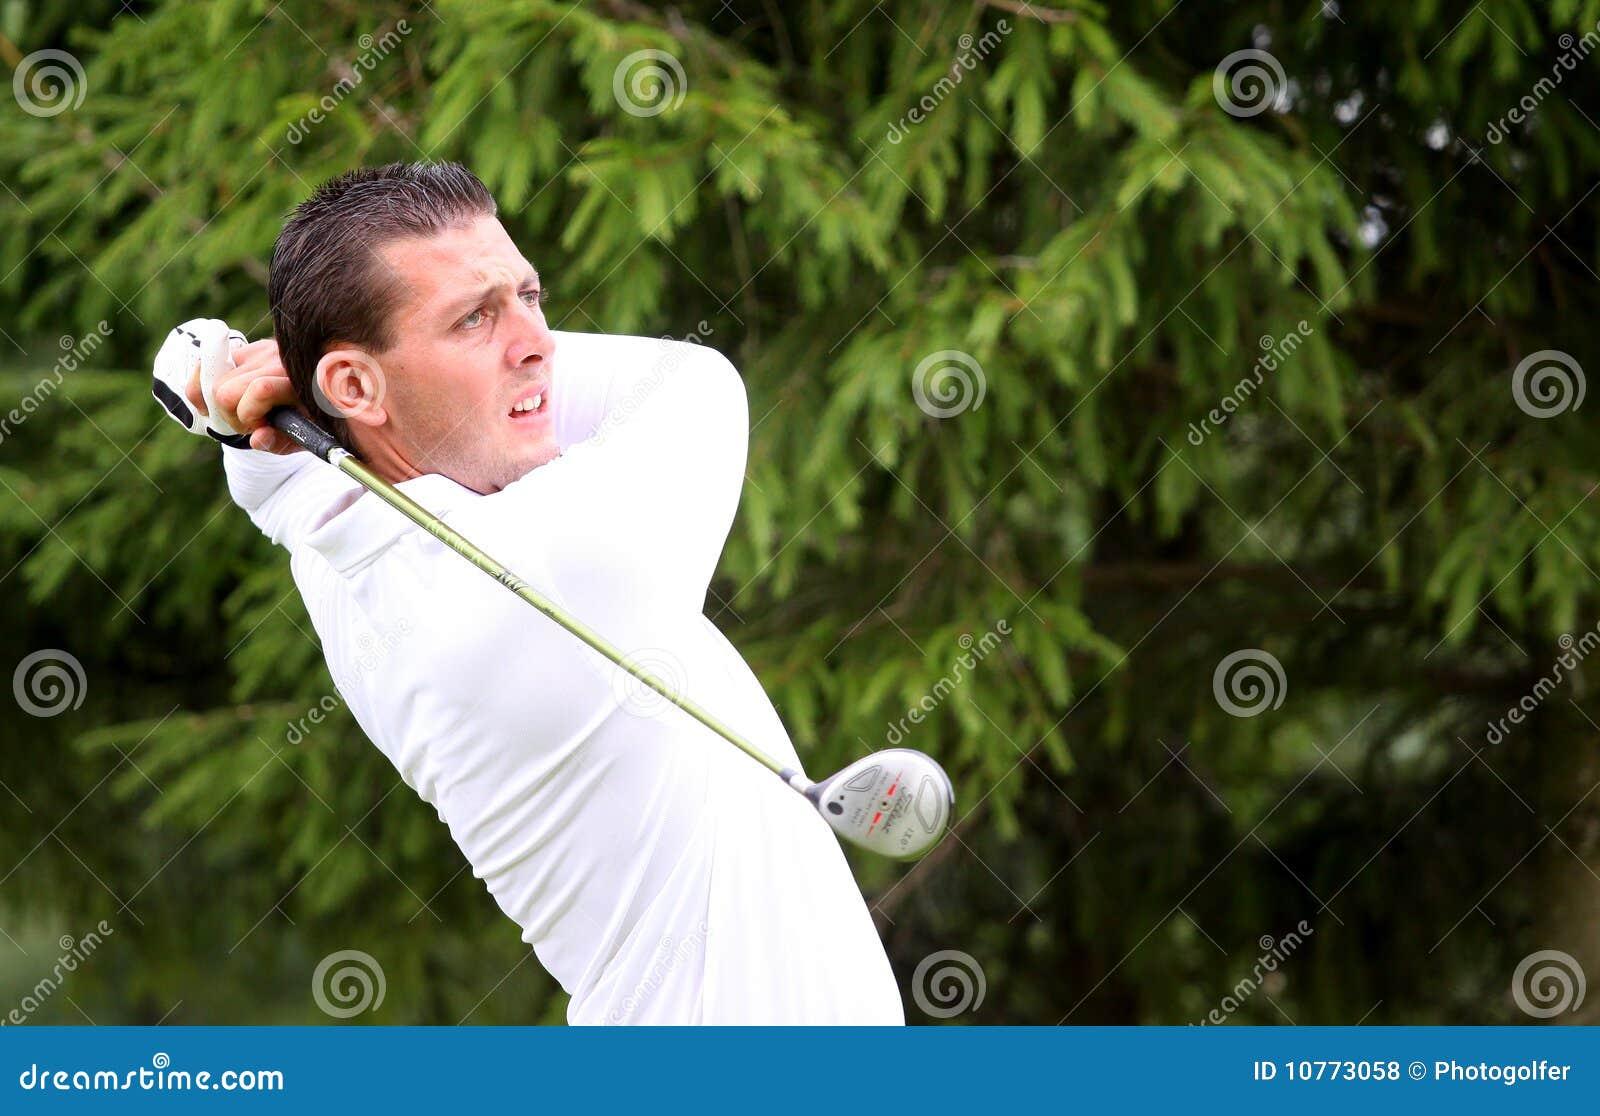 Porteboeuf at the Golf Prevens Trpohee 2009 Editorial Stock Photo ...